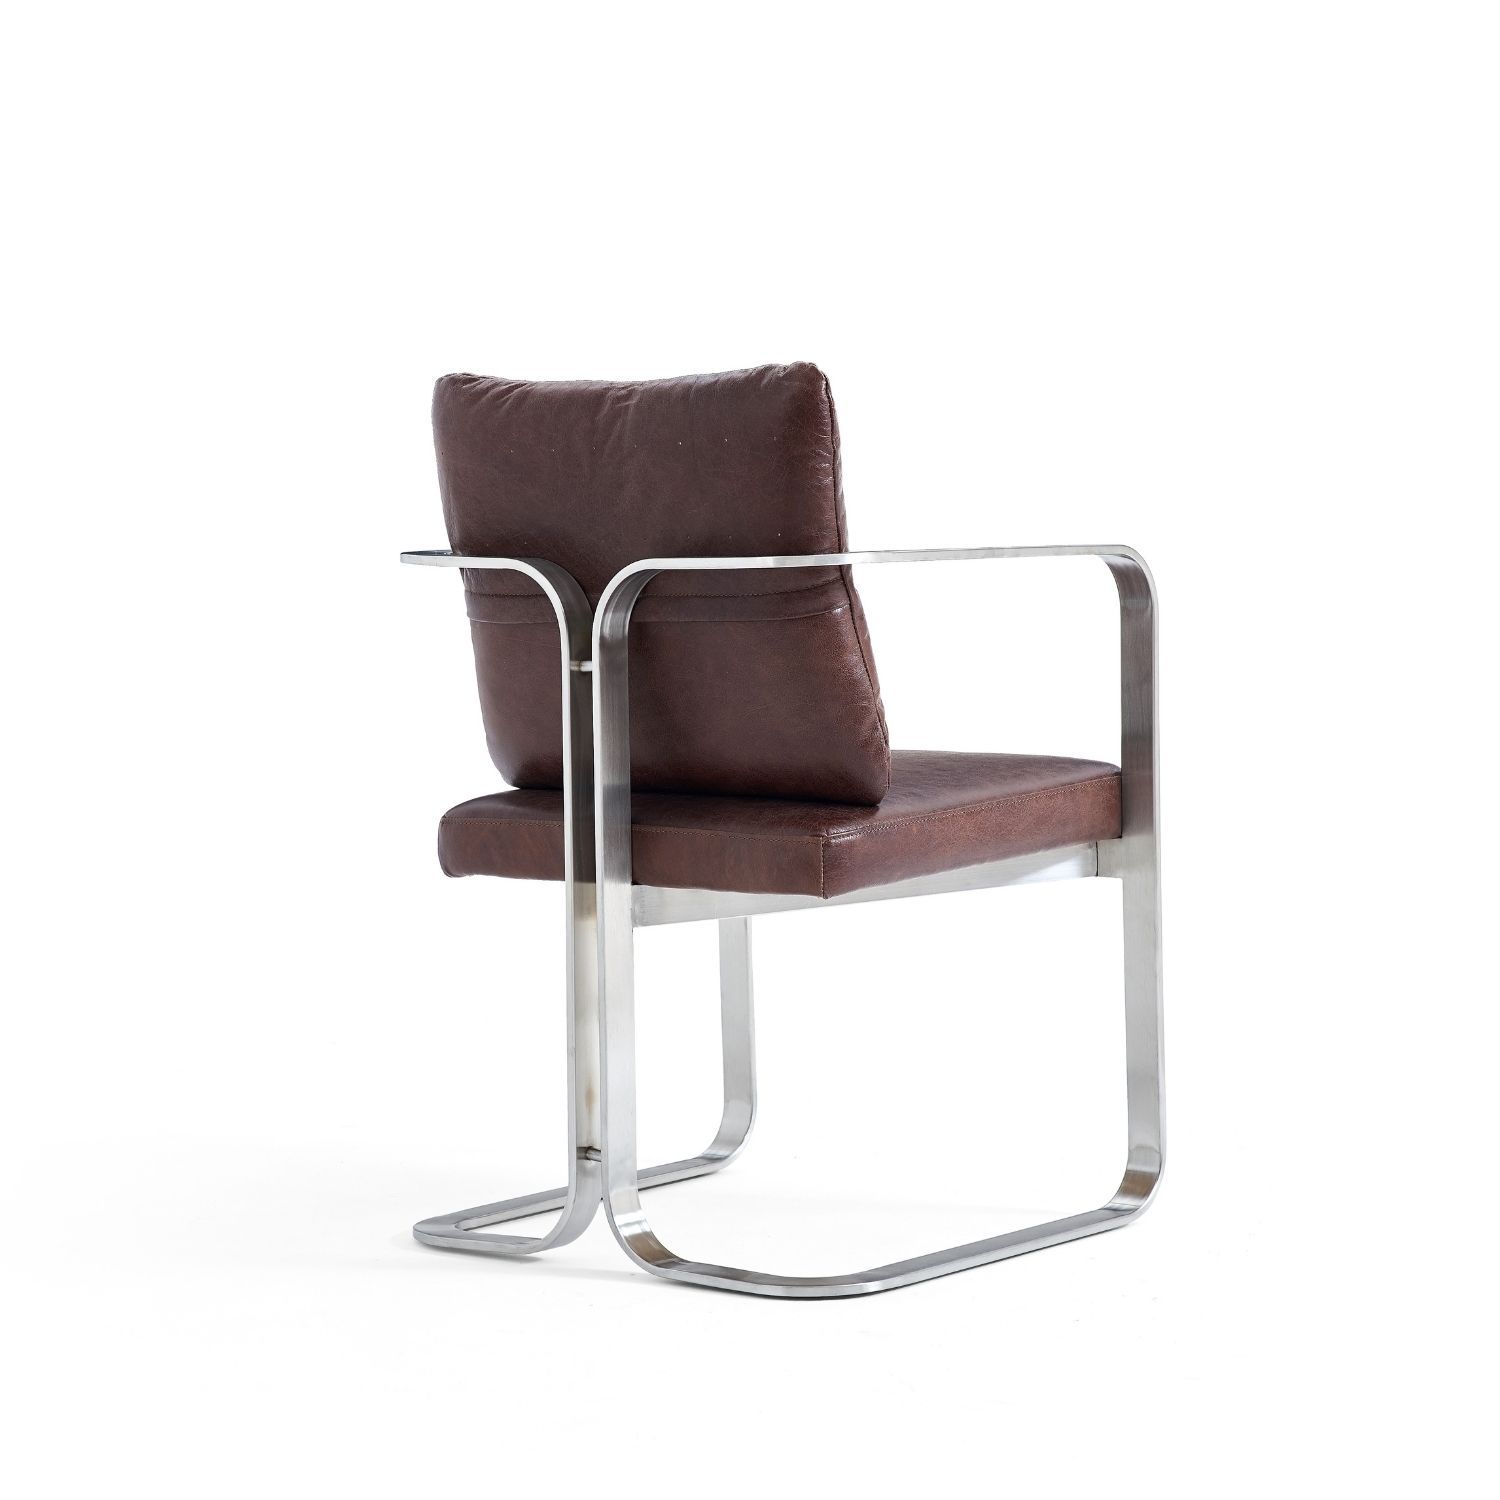 Timmins Chair Chair Foundry 